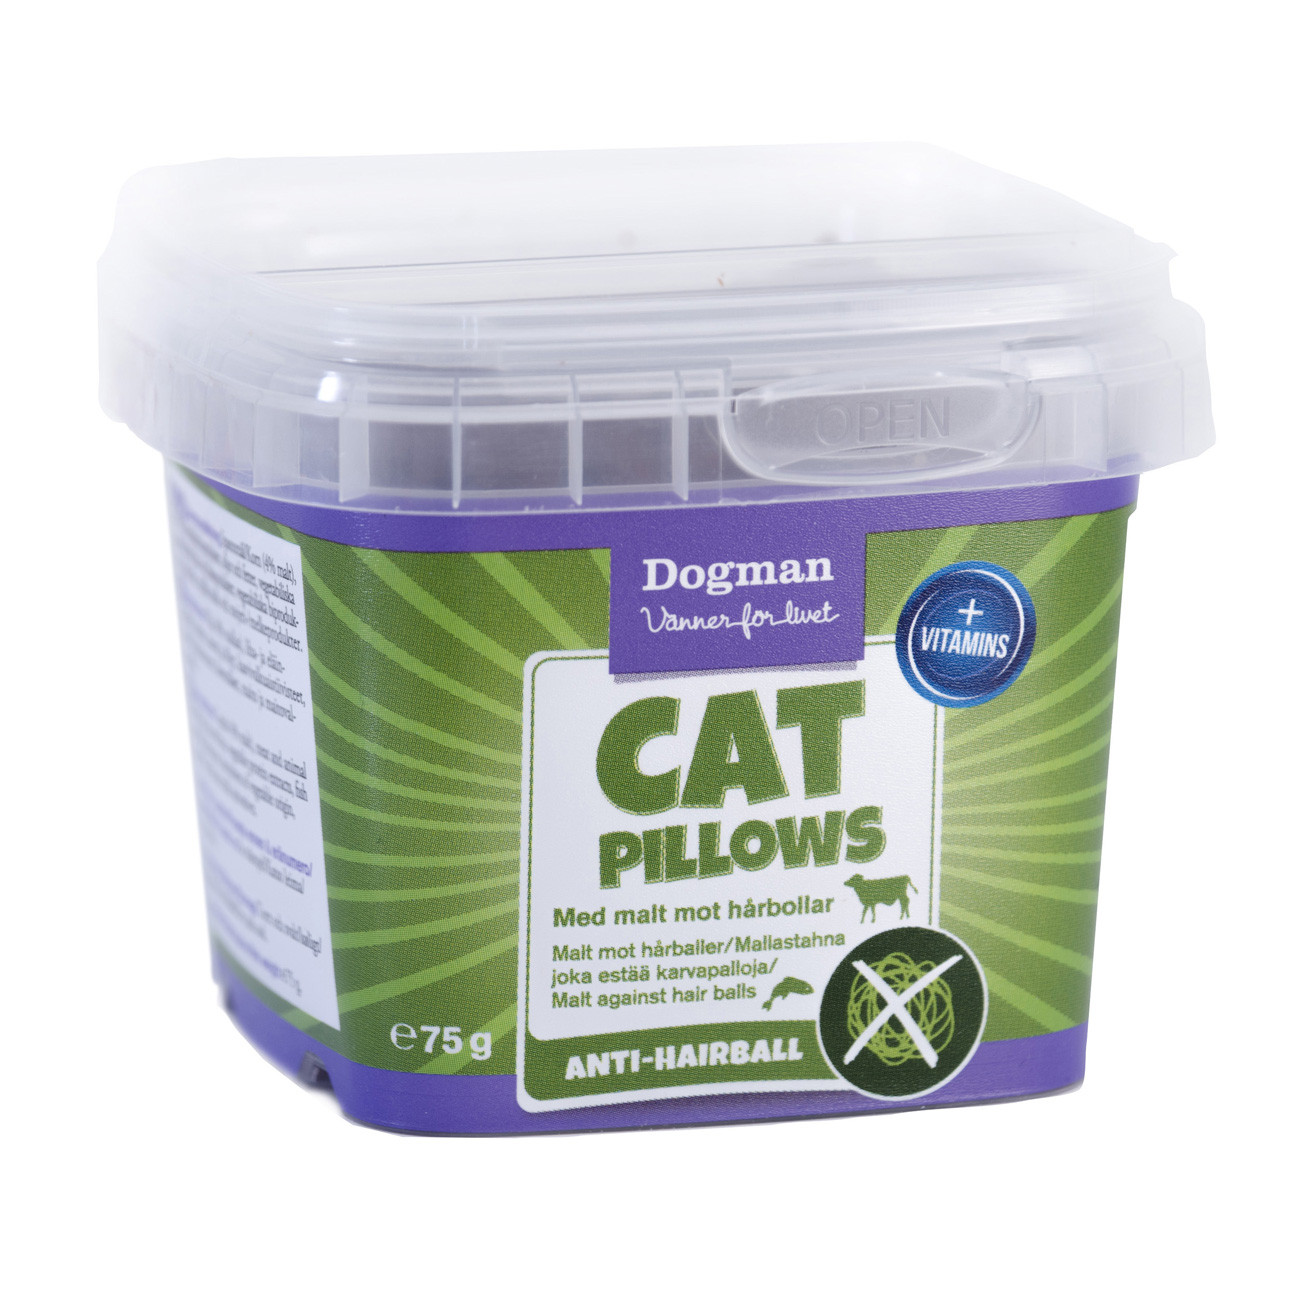 Cat pillows anti hårboll 75gr